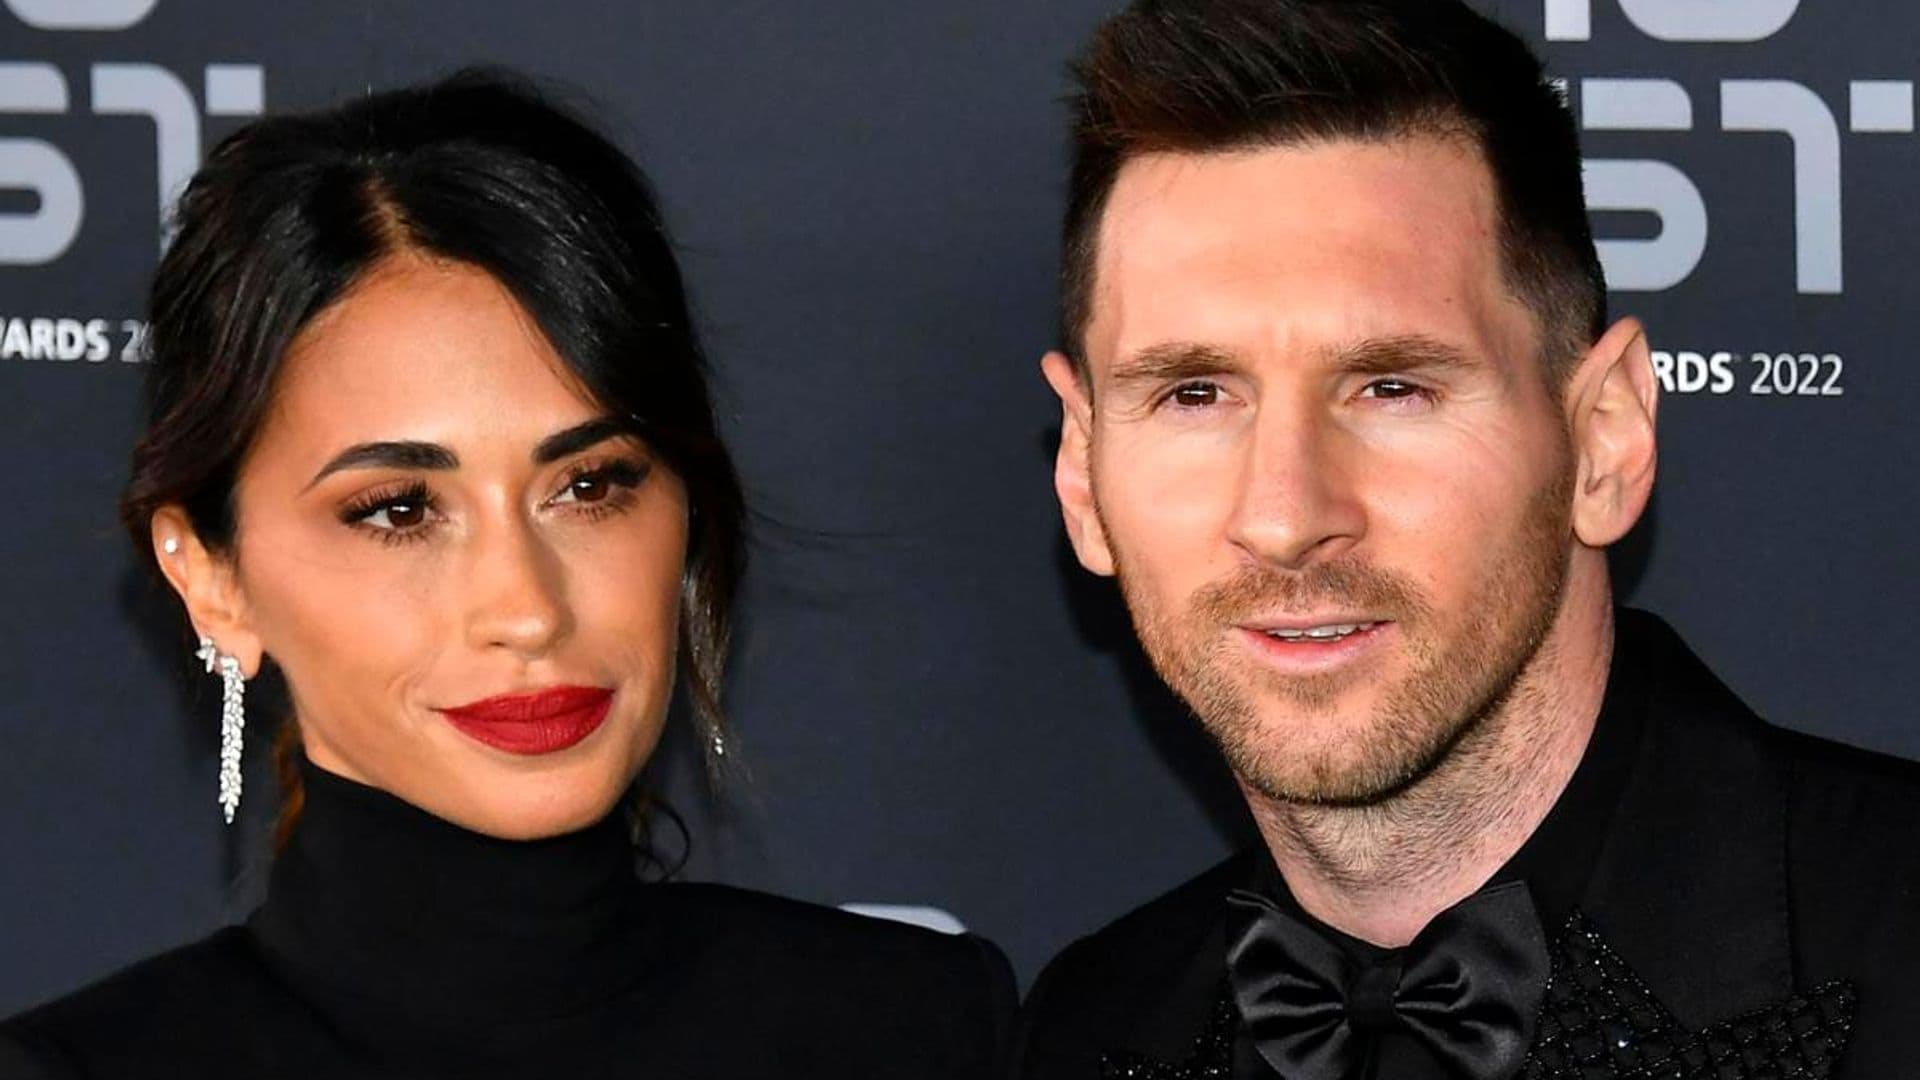 Messi celebrates his ‘princess’ Antonela Roccuzzo’s 36th birthday